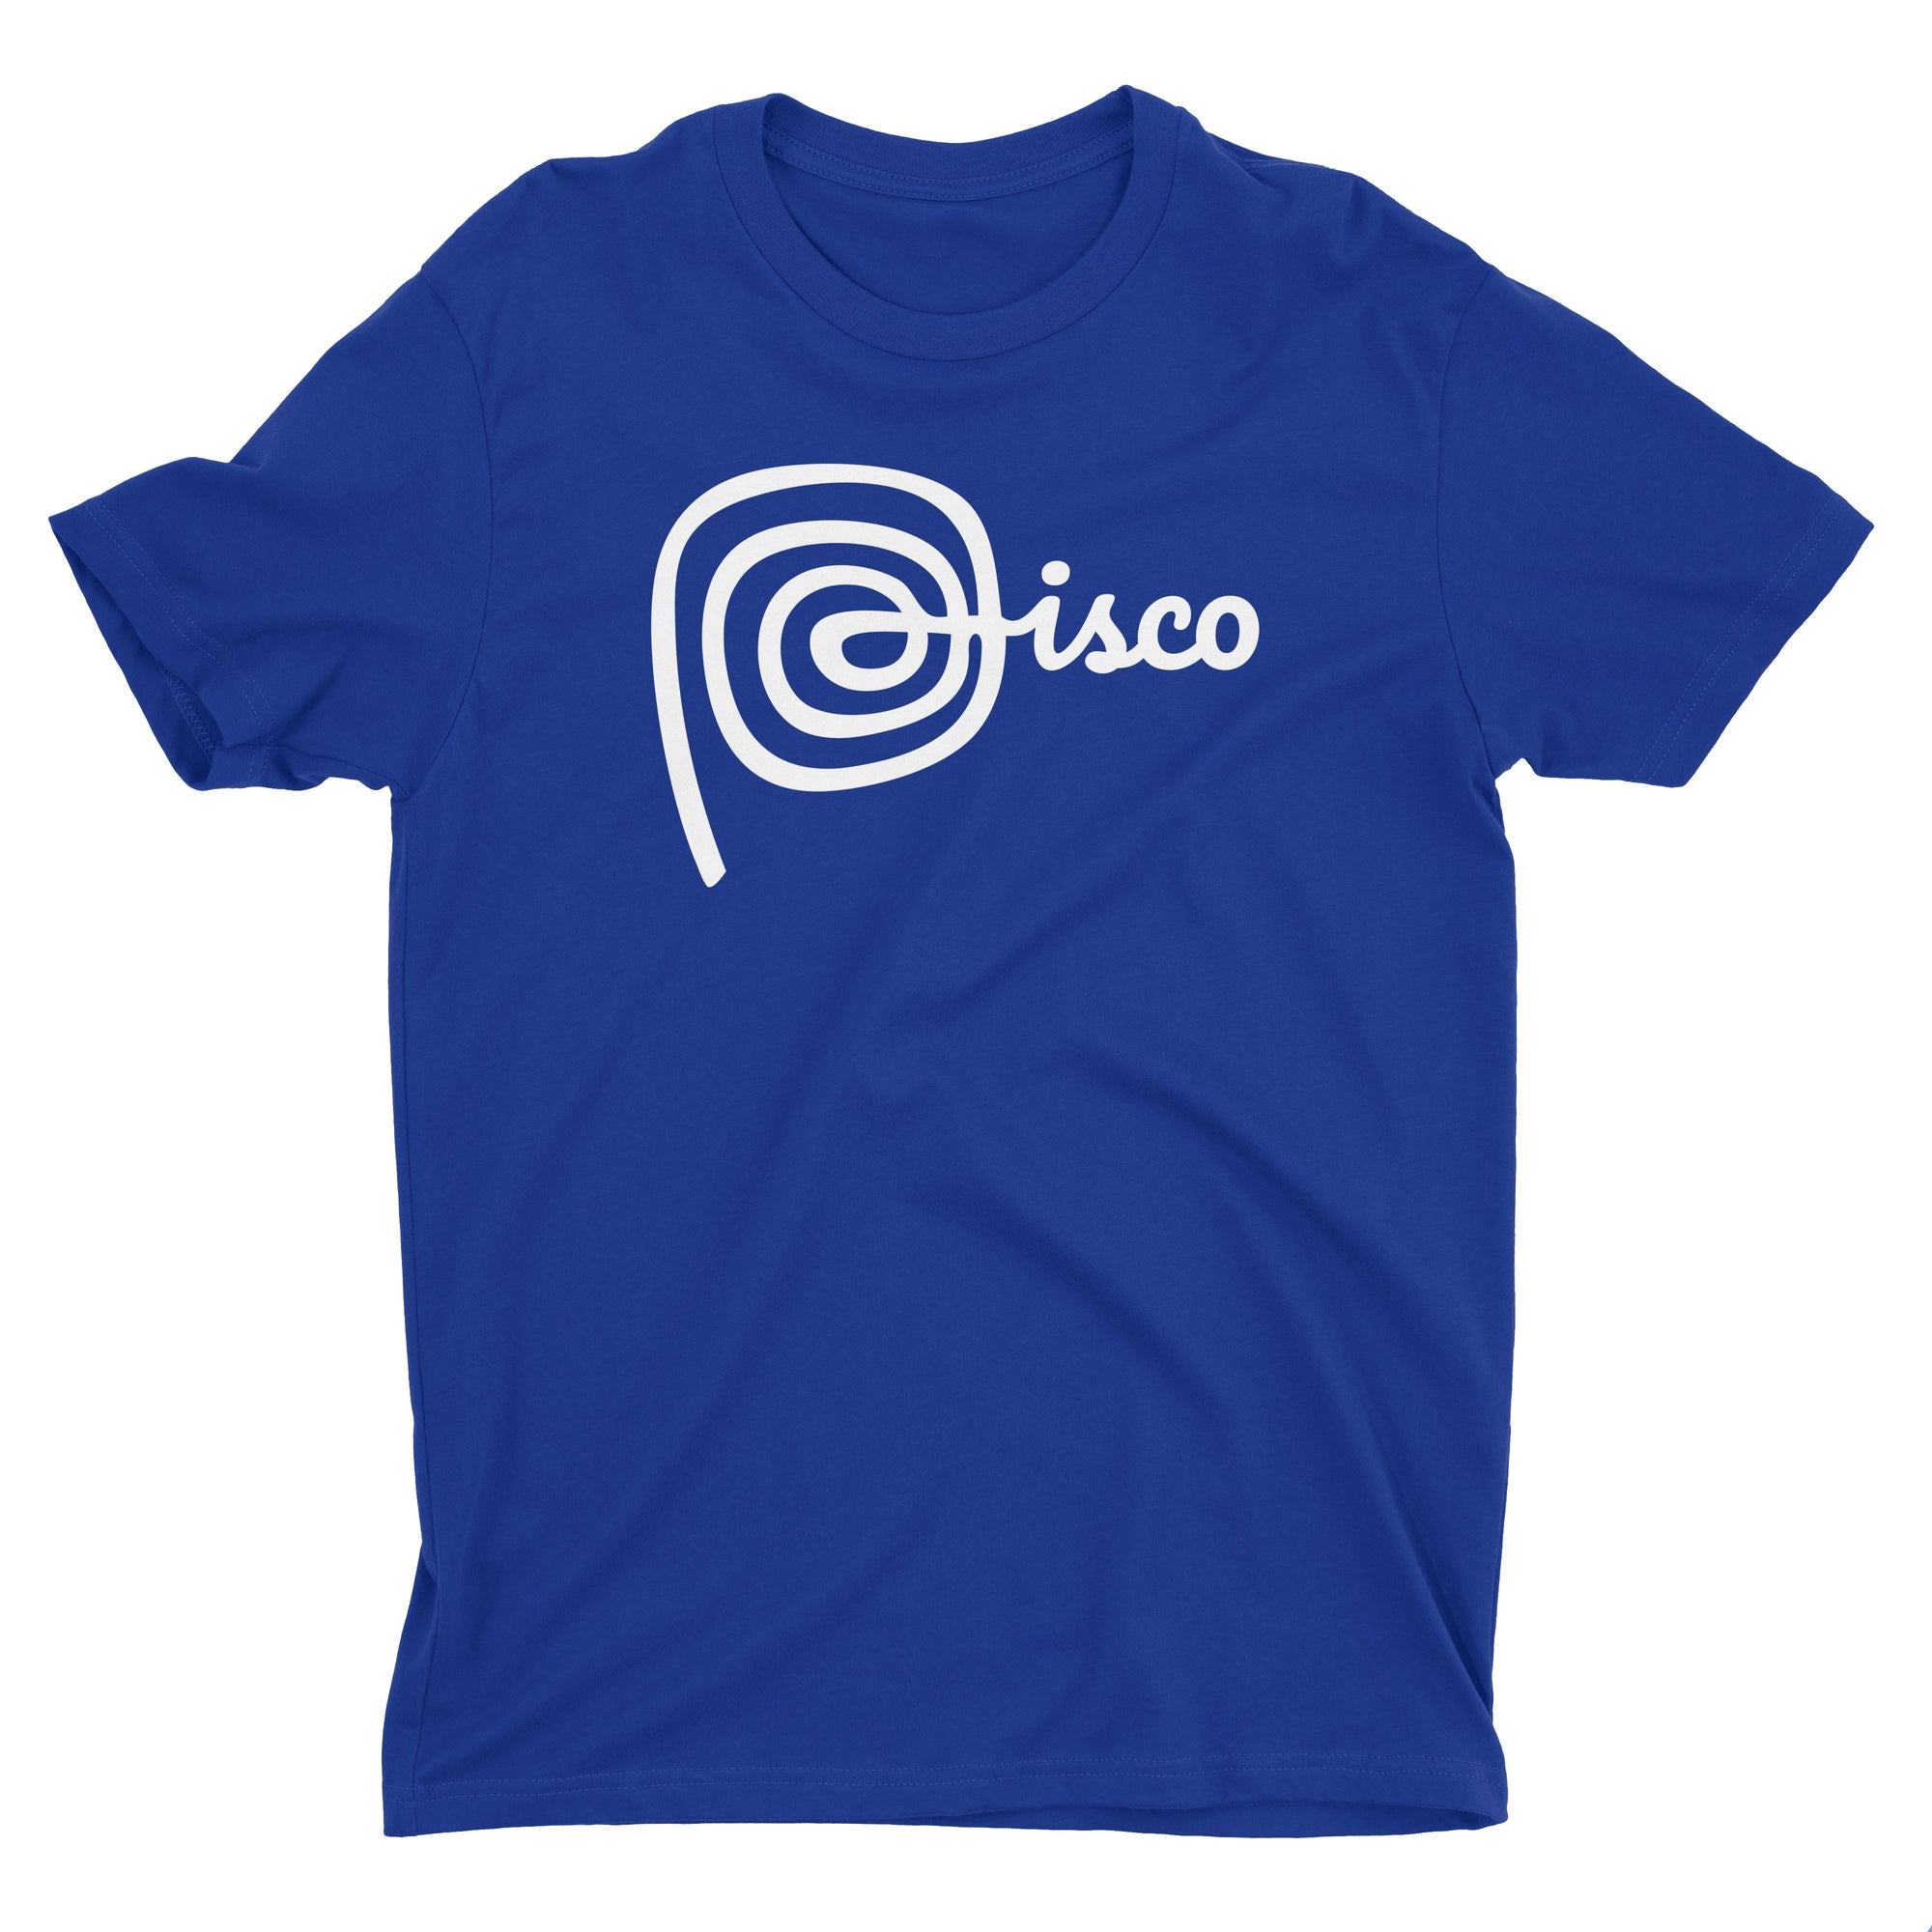 Marca Peru Pisco Sour Blue T-Shirt for Men